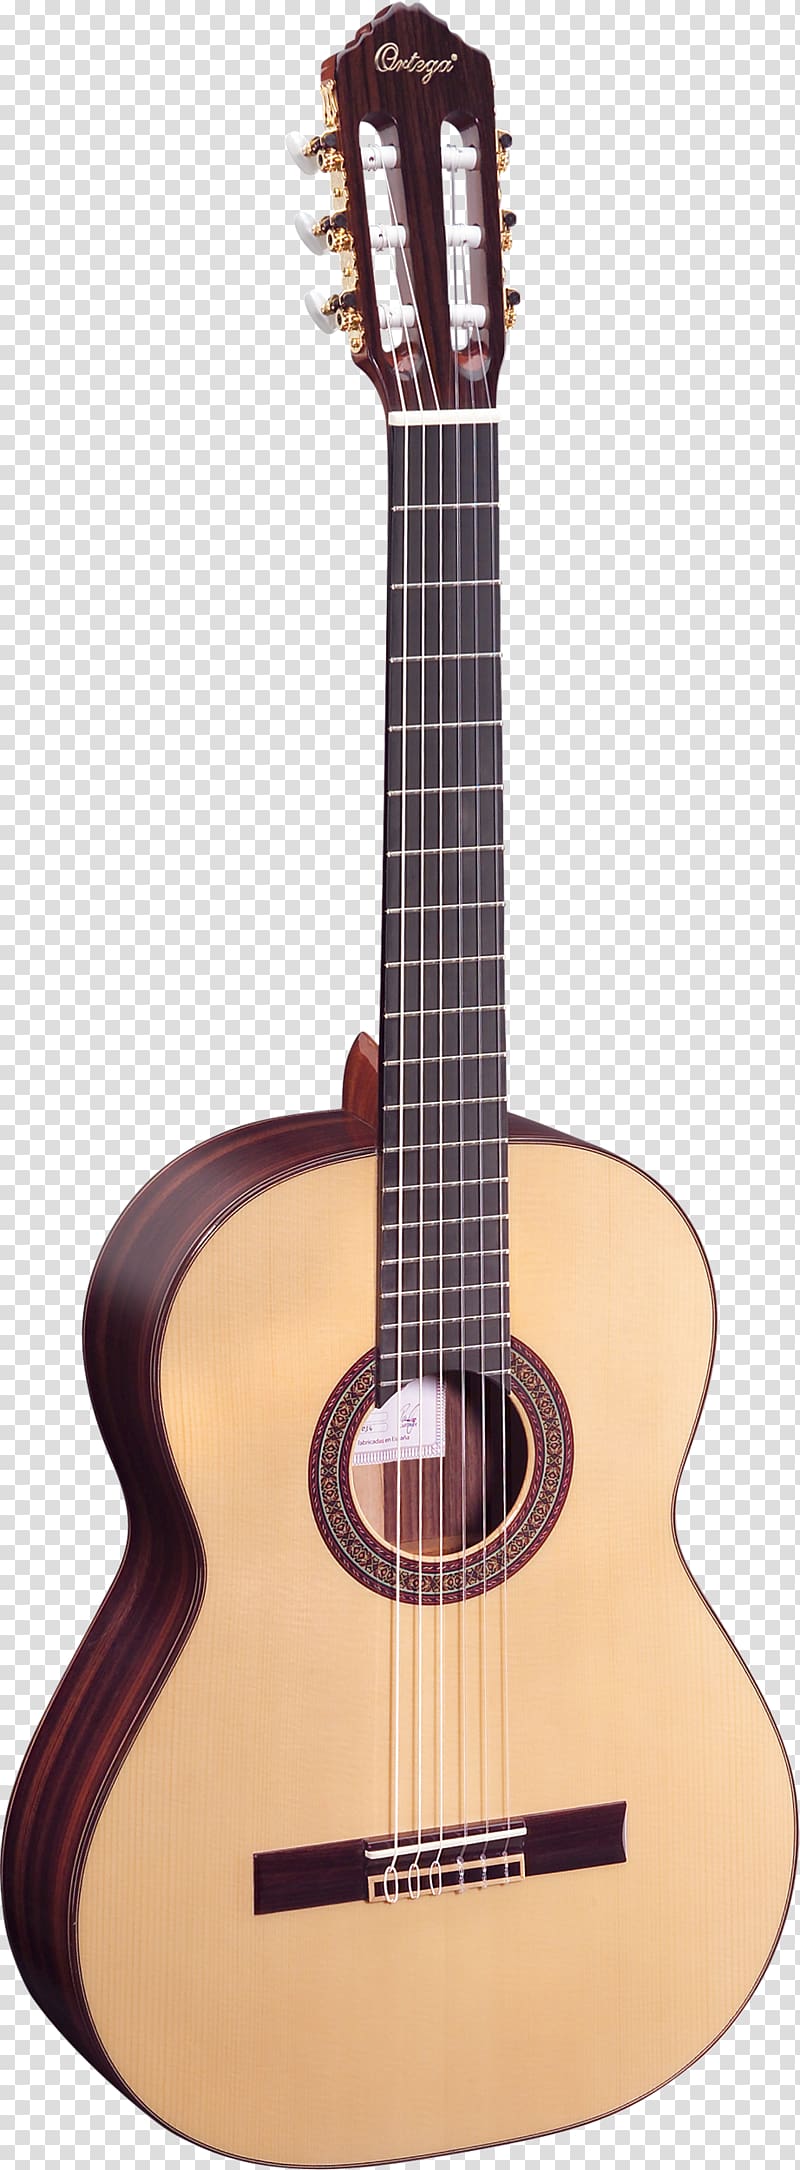 Twelve-string guitar Steel-string acoustic guitar Parlor guitar, amancio ortega transparent background PNG clipart